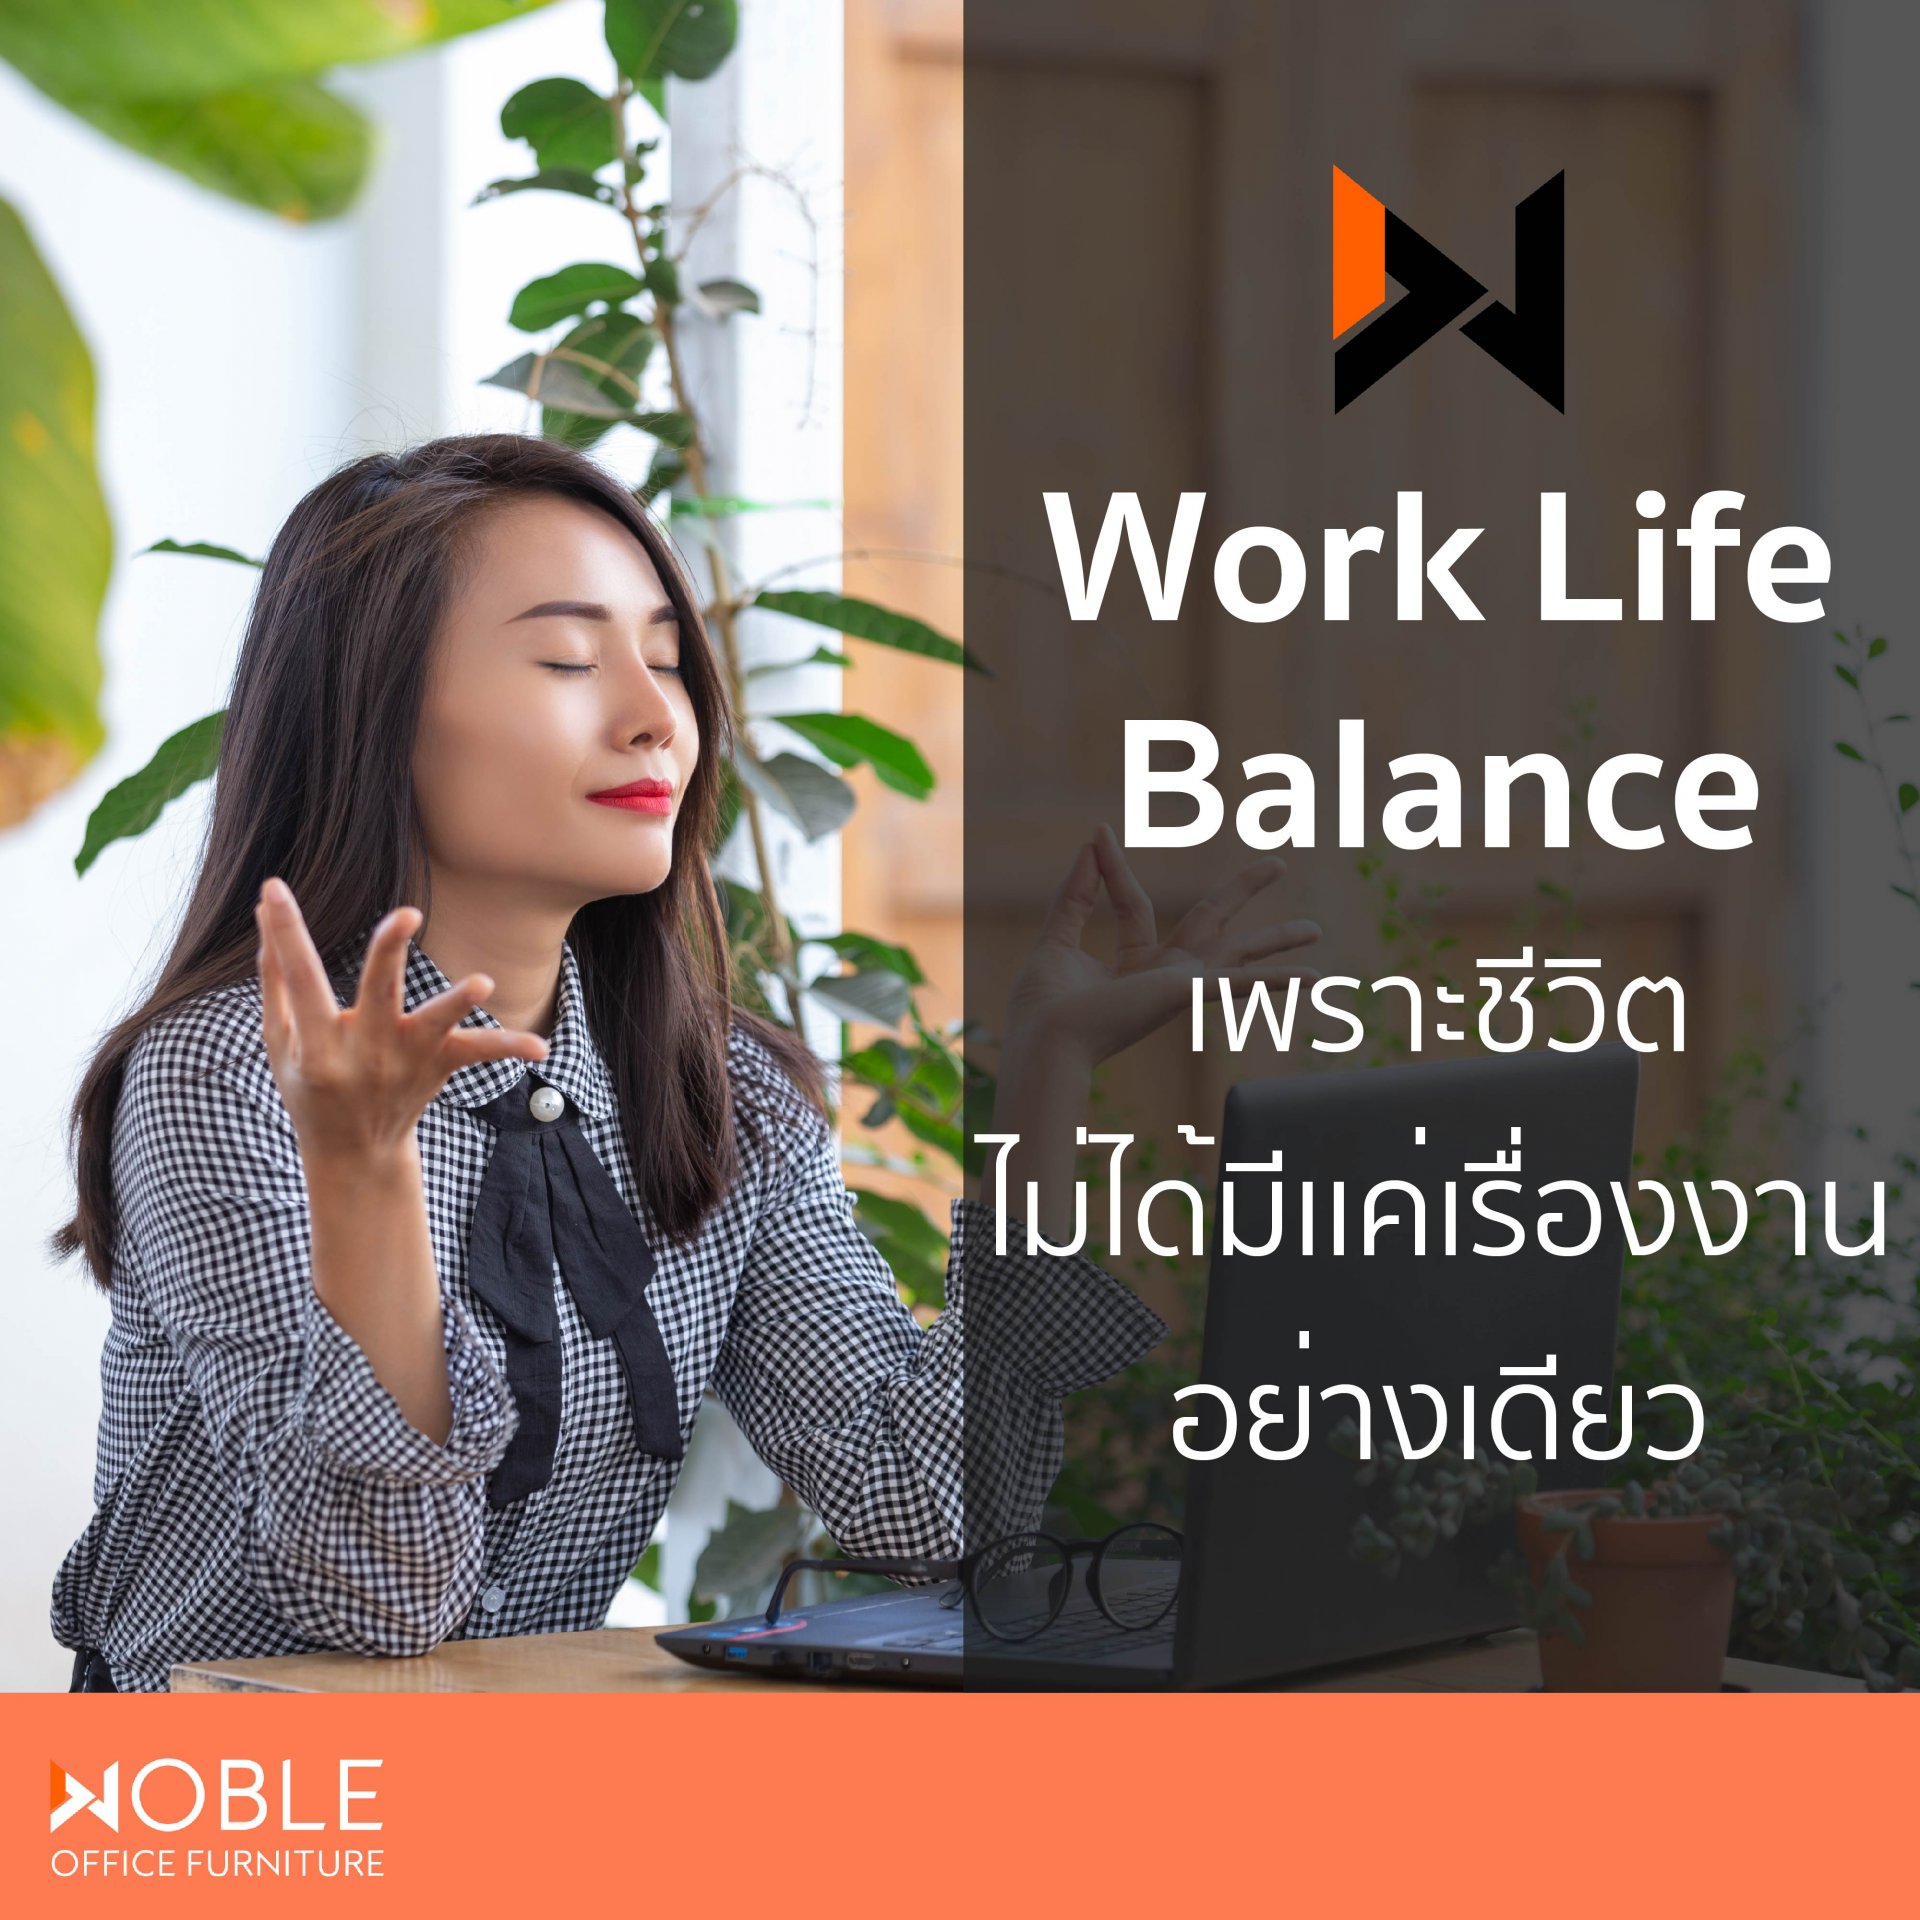 Work-life Balance เพราะชีวิตไม่ได้มีเเค่เรื่องงานอย่างเดียว